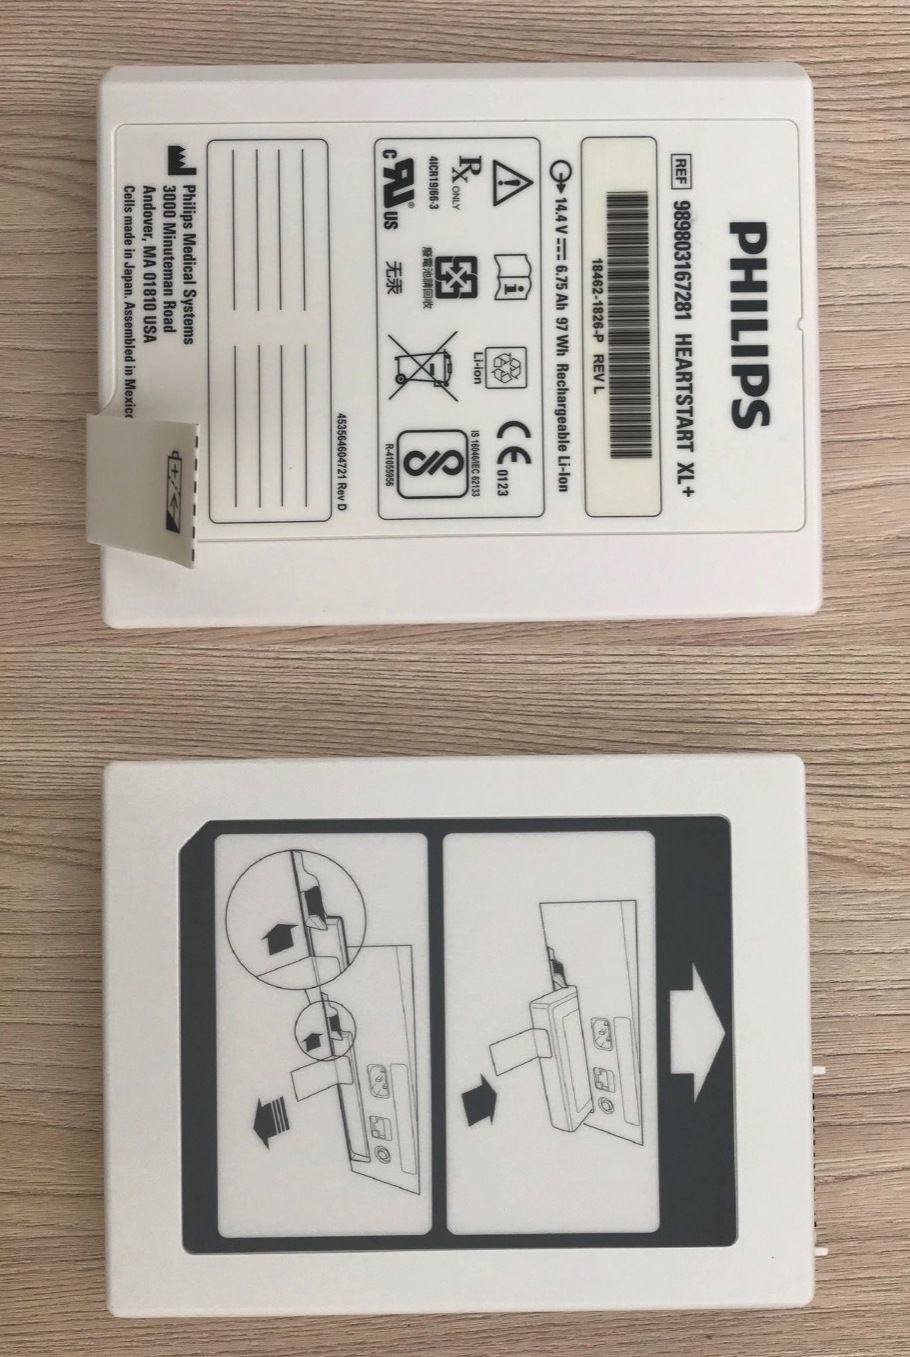 Original Battery for Philips HeartStart XL+_แบตเตอรี่เครื่องดีฟิบริลเลเตอร์ฟิลิปส์ฮาร์ทสตาร์ทเอกซ์แอลพลัส Philips Heartstart XL+